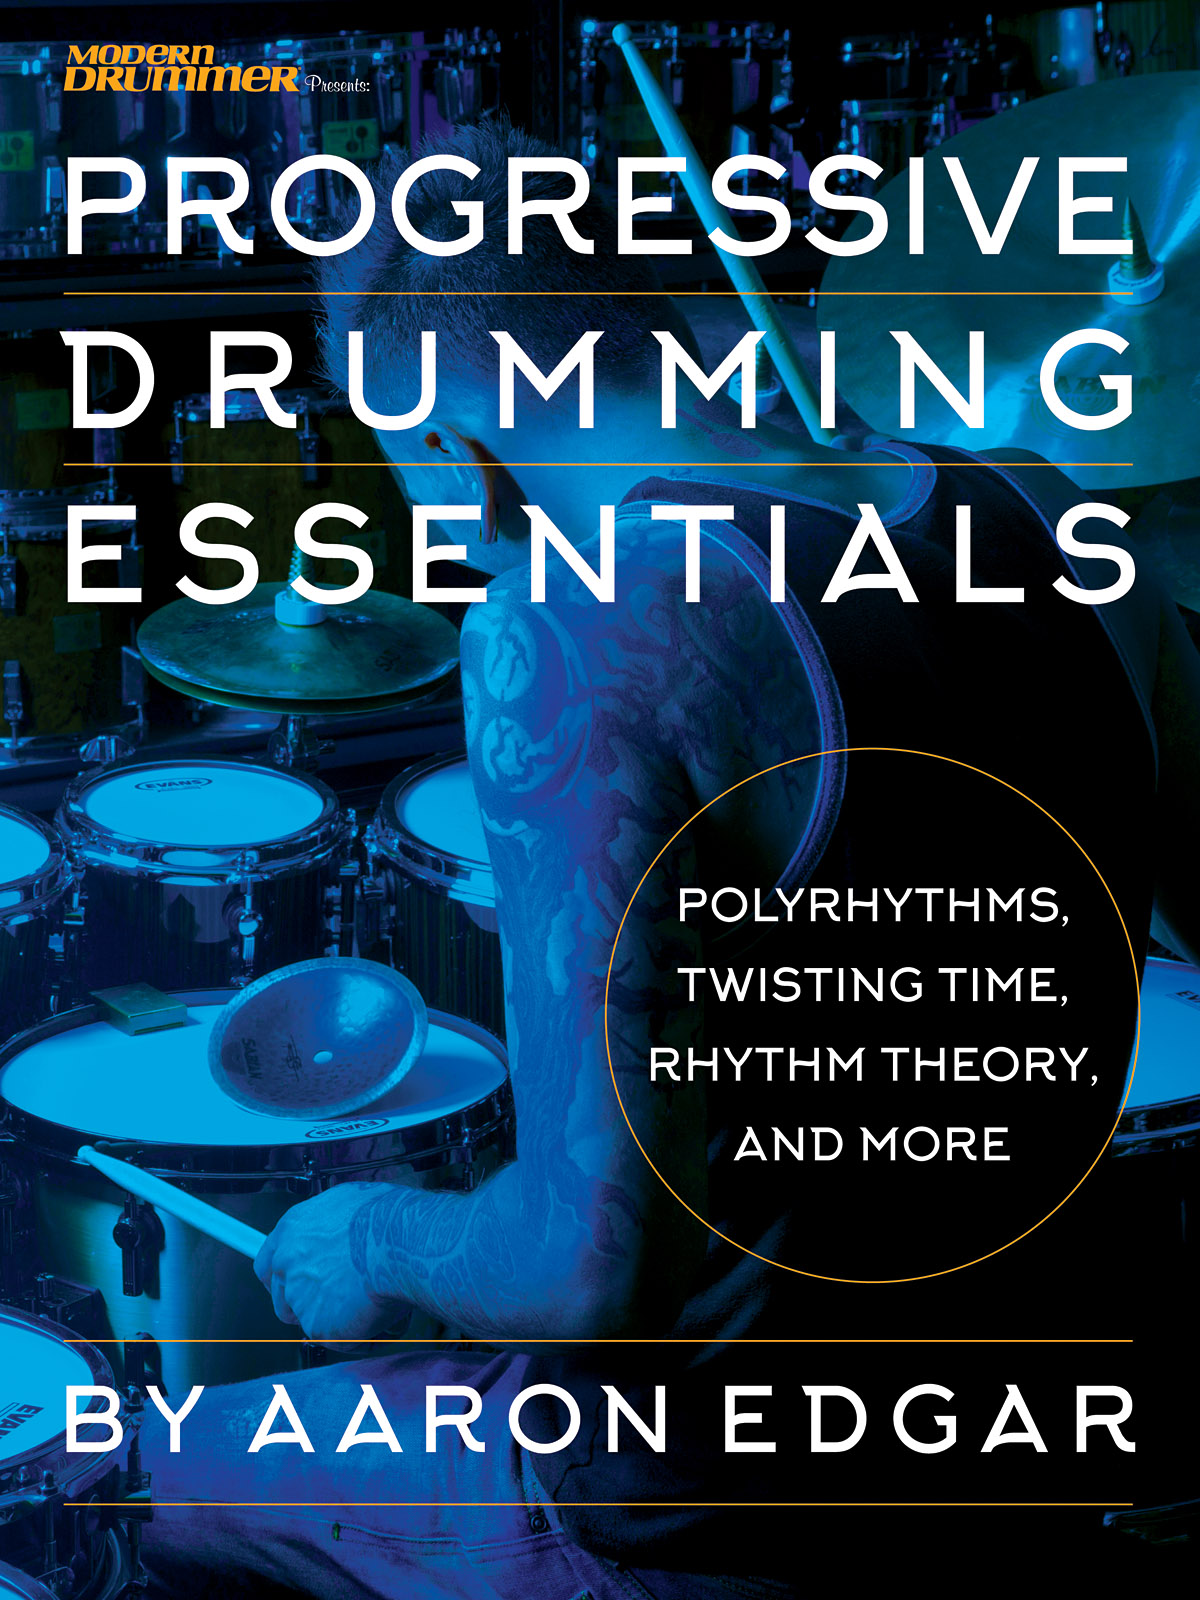 Progressive Drumming Essentials - Polyrhythms, Twisting Time, Rhythm Theory & More